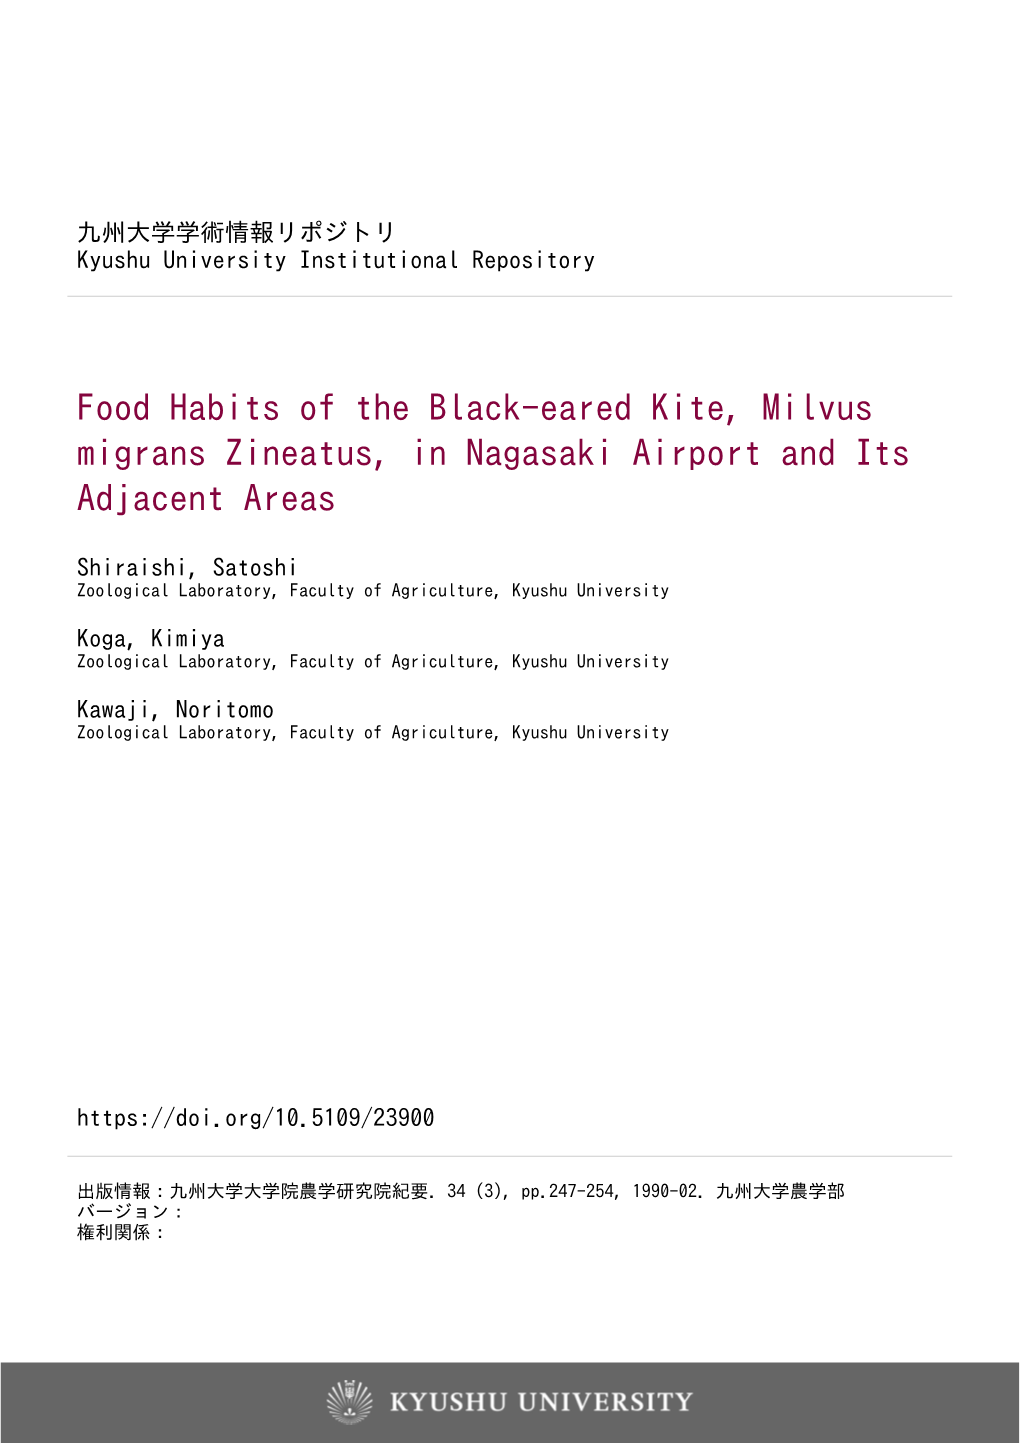 Food Habits of the Black-Eared Kite, Milvus Migrans Zineatus, in Nagasaki Airport and Its Adjacent Areas